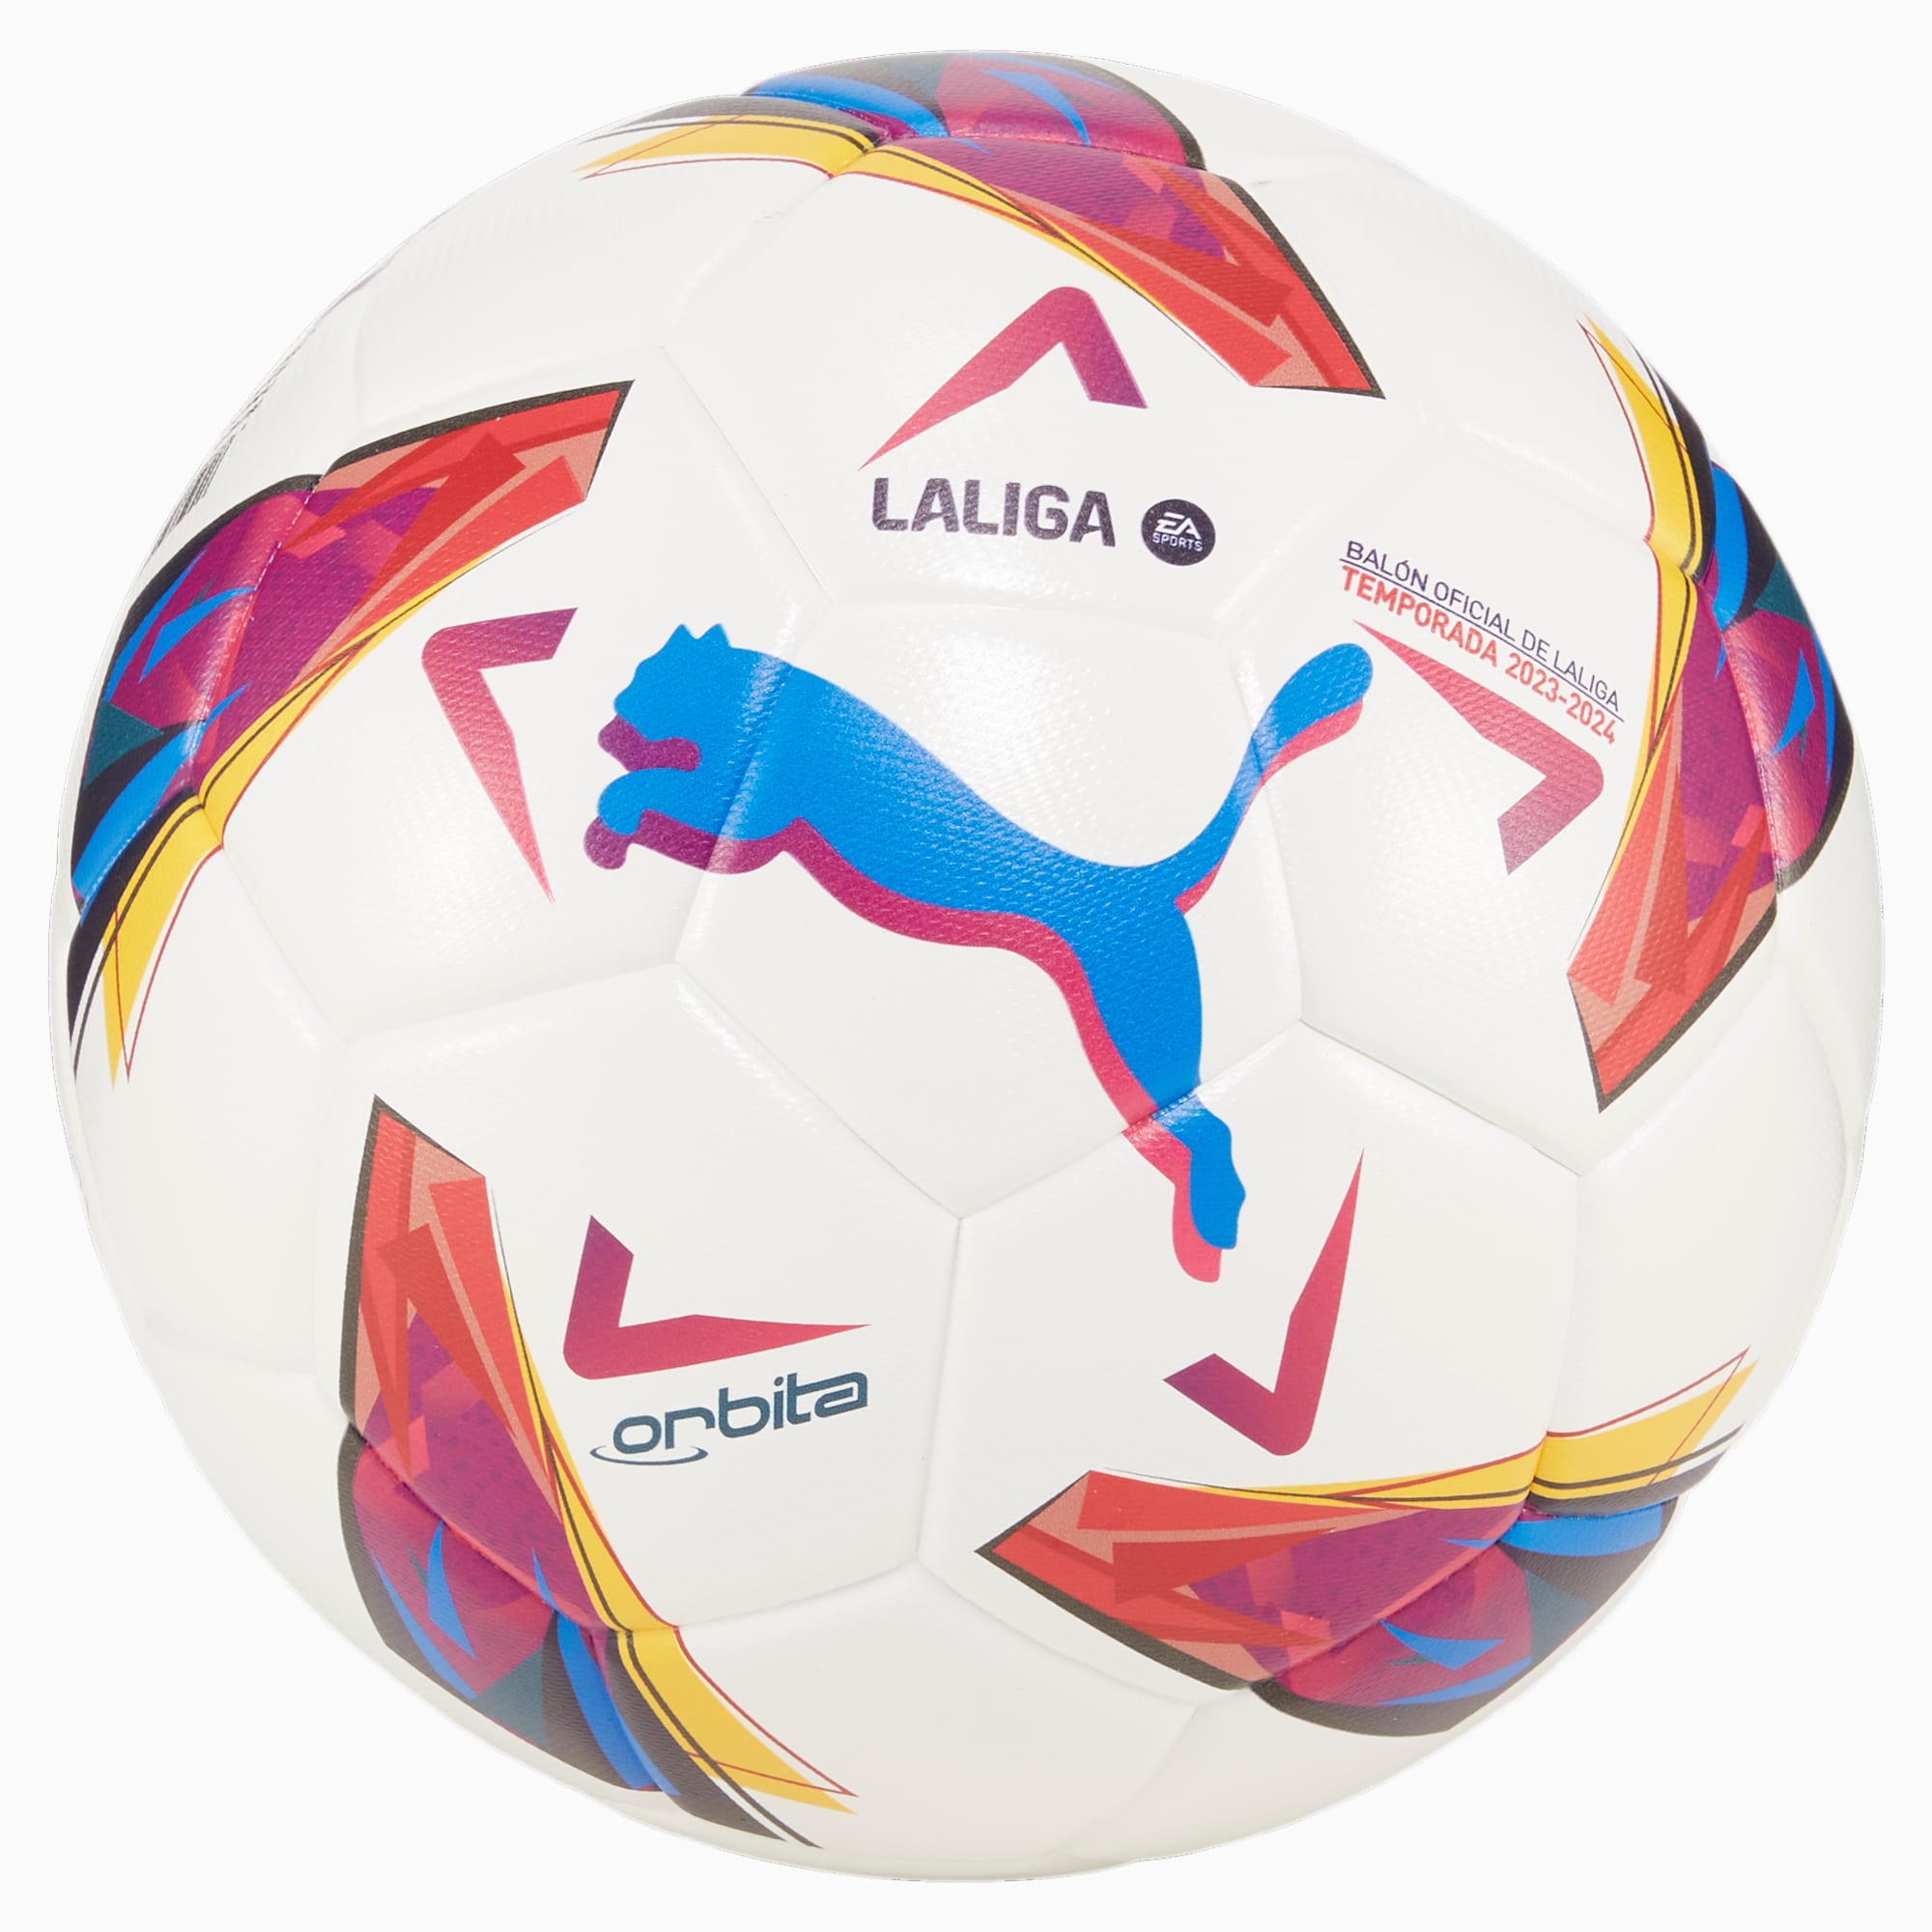 Orbita LaLiga 1 Replica Soccer Ball